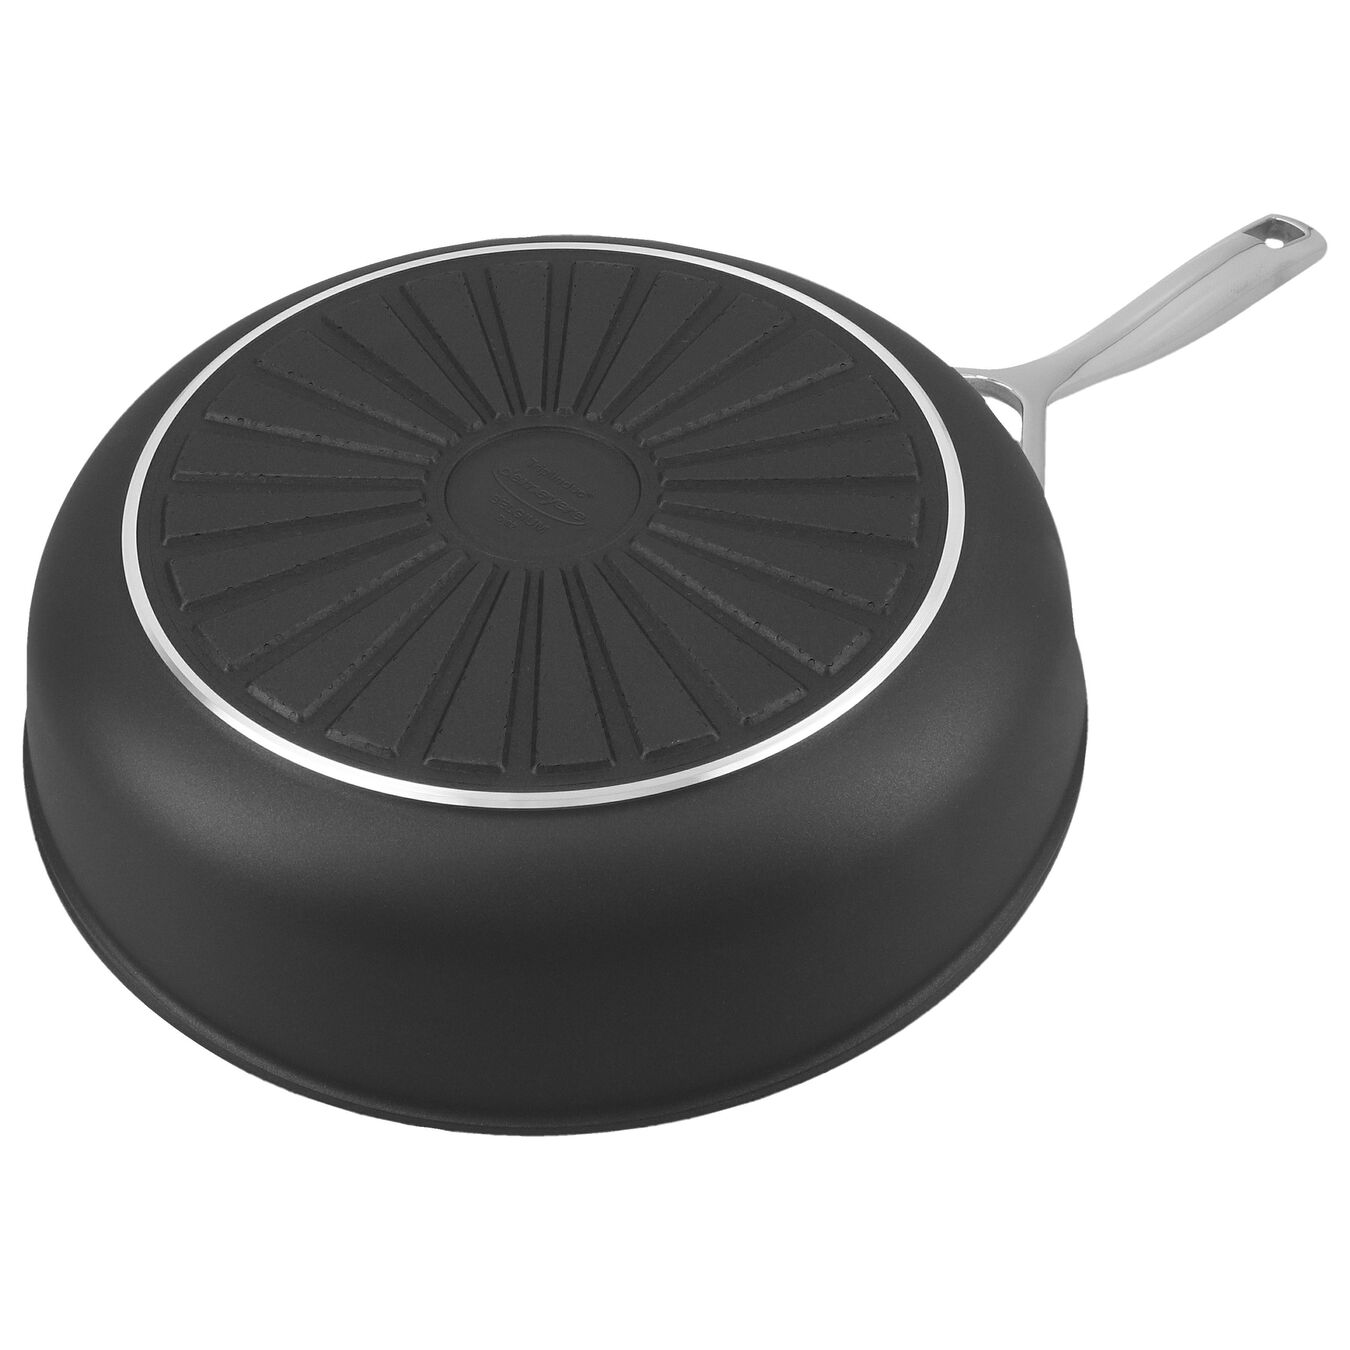 24 cm Aluminium Frying pan high-sided silver-black,,large 3